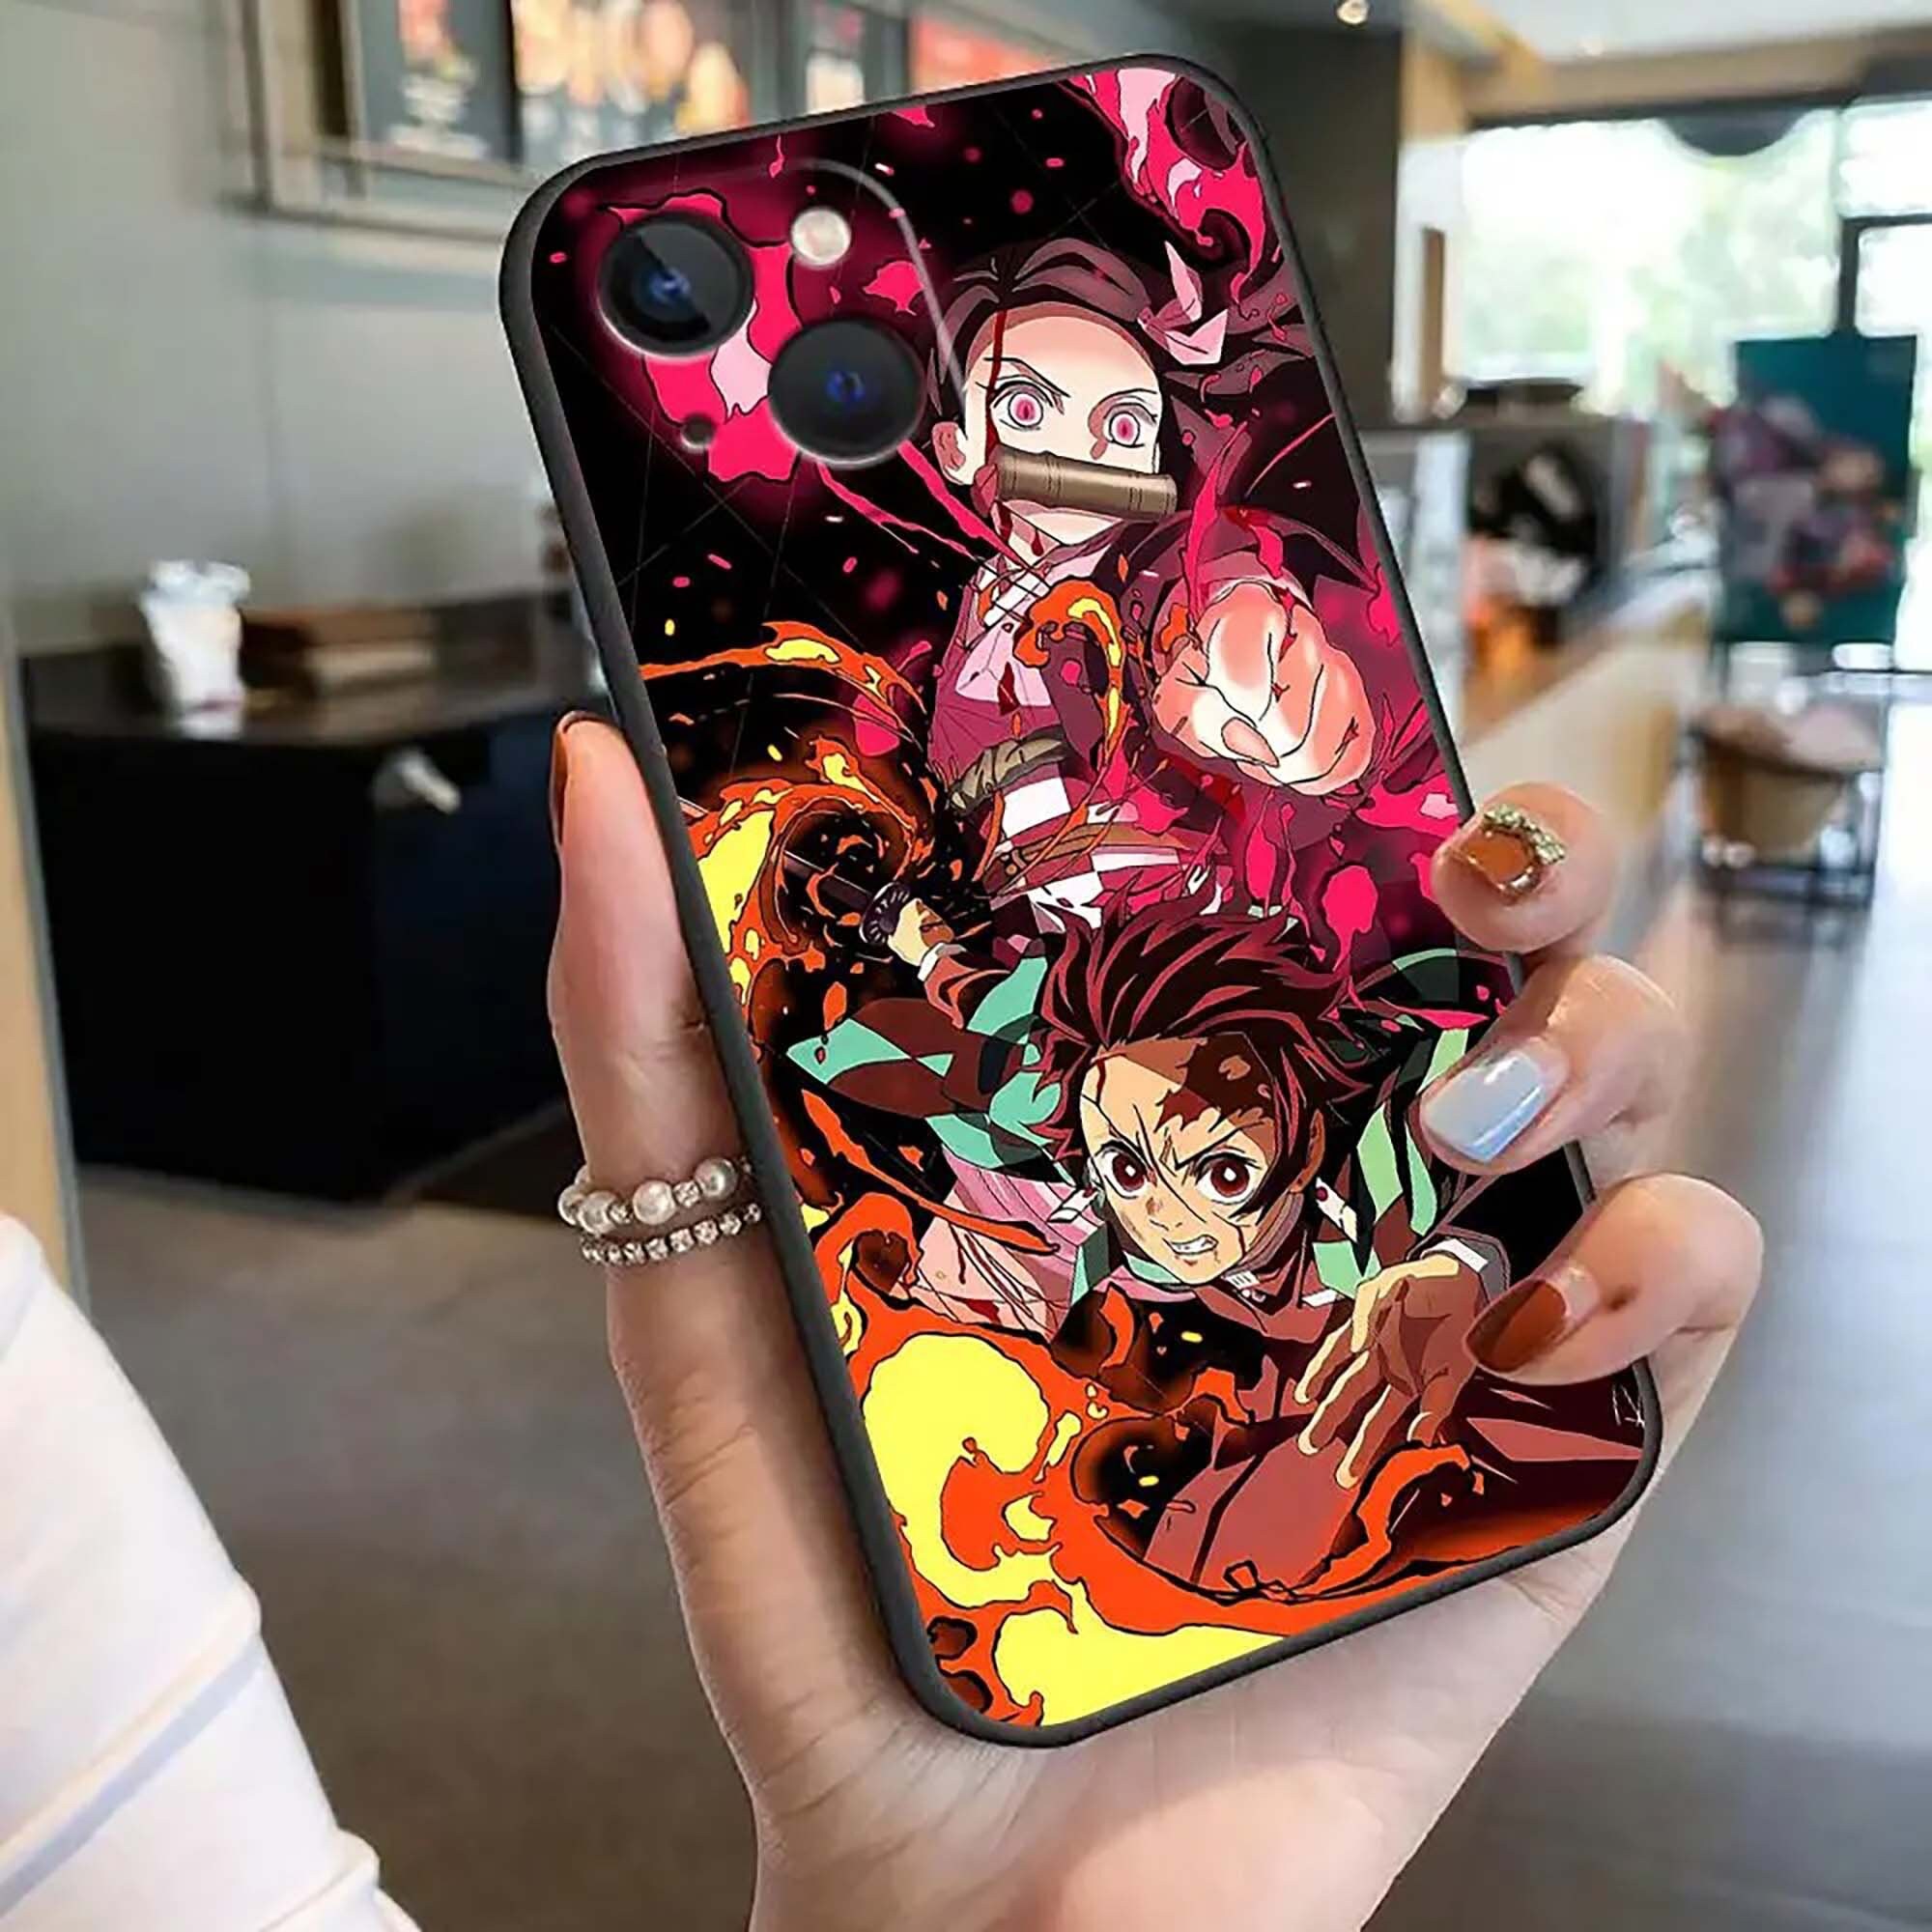 Kimetsu No Yaiba Anime, a phone case by Kun Funny - INPRNT